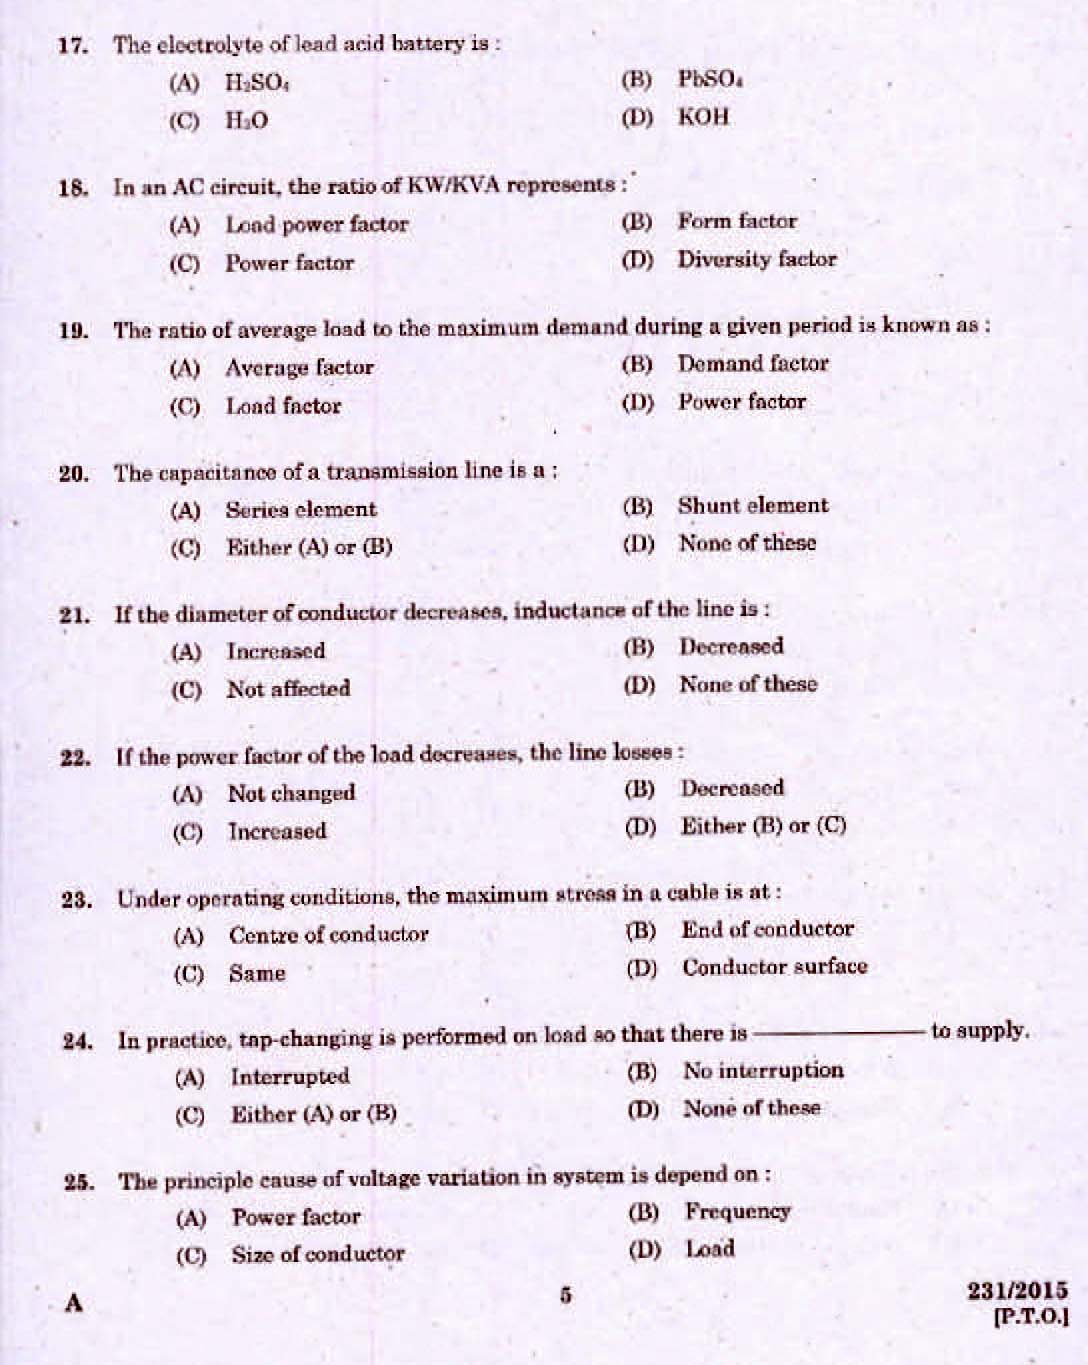 Kerala PSC Electrician Exam 2015 Question Paper Code 2312015 3